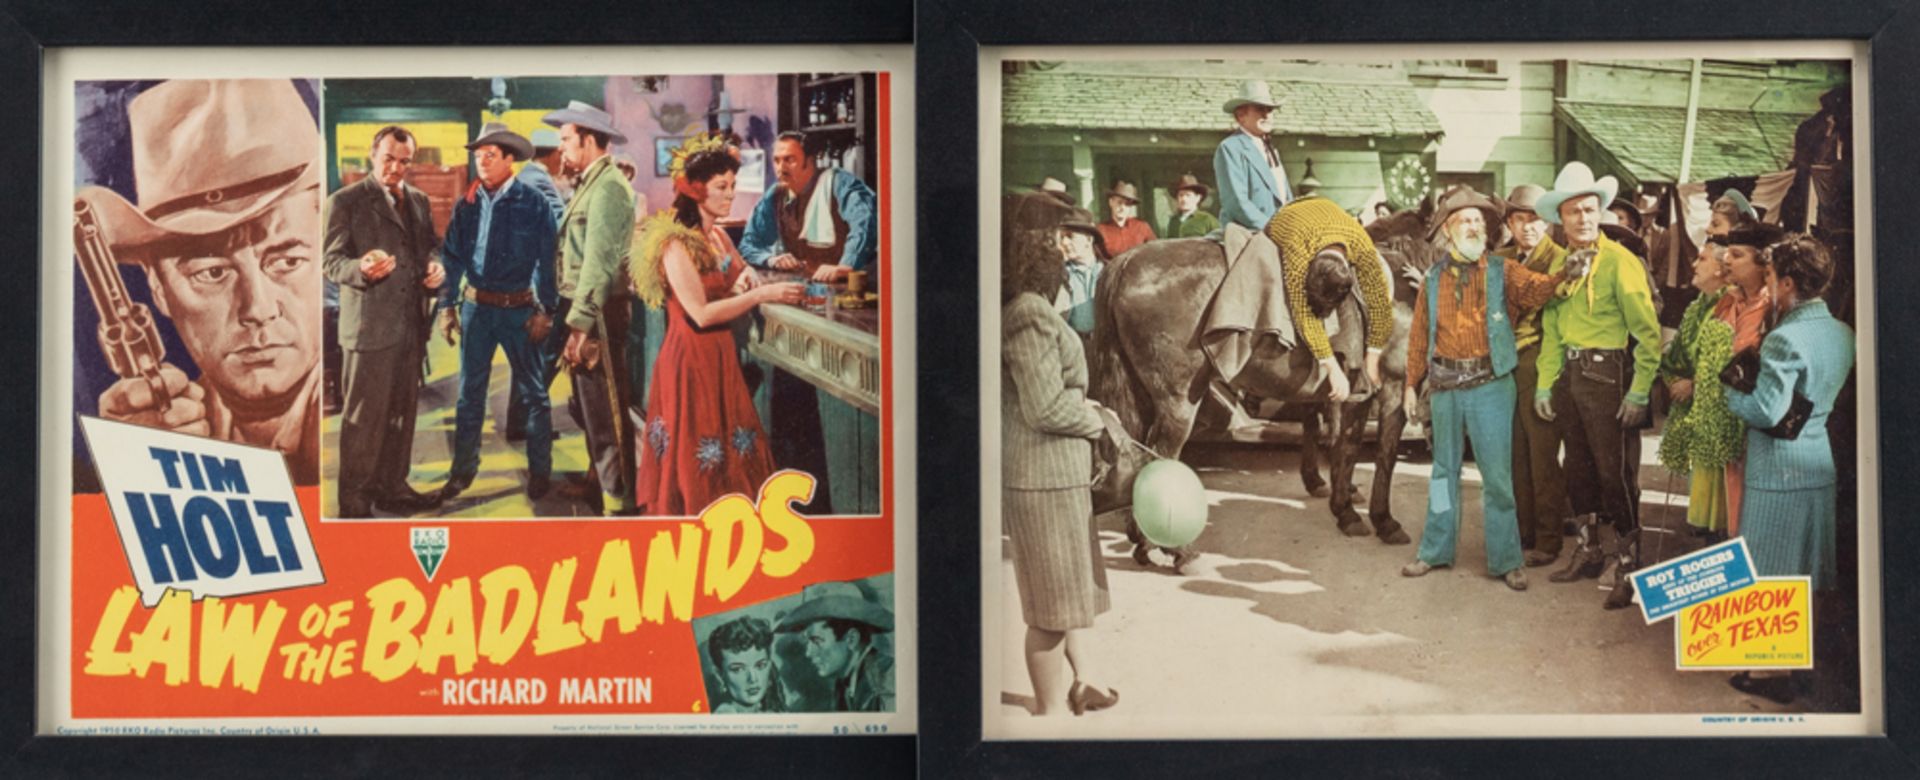 Three framed Lobby Posters titled: (1) "Frontier Gun" starring John Agar, Joyce Meadows, released by